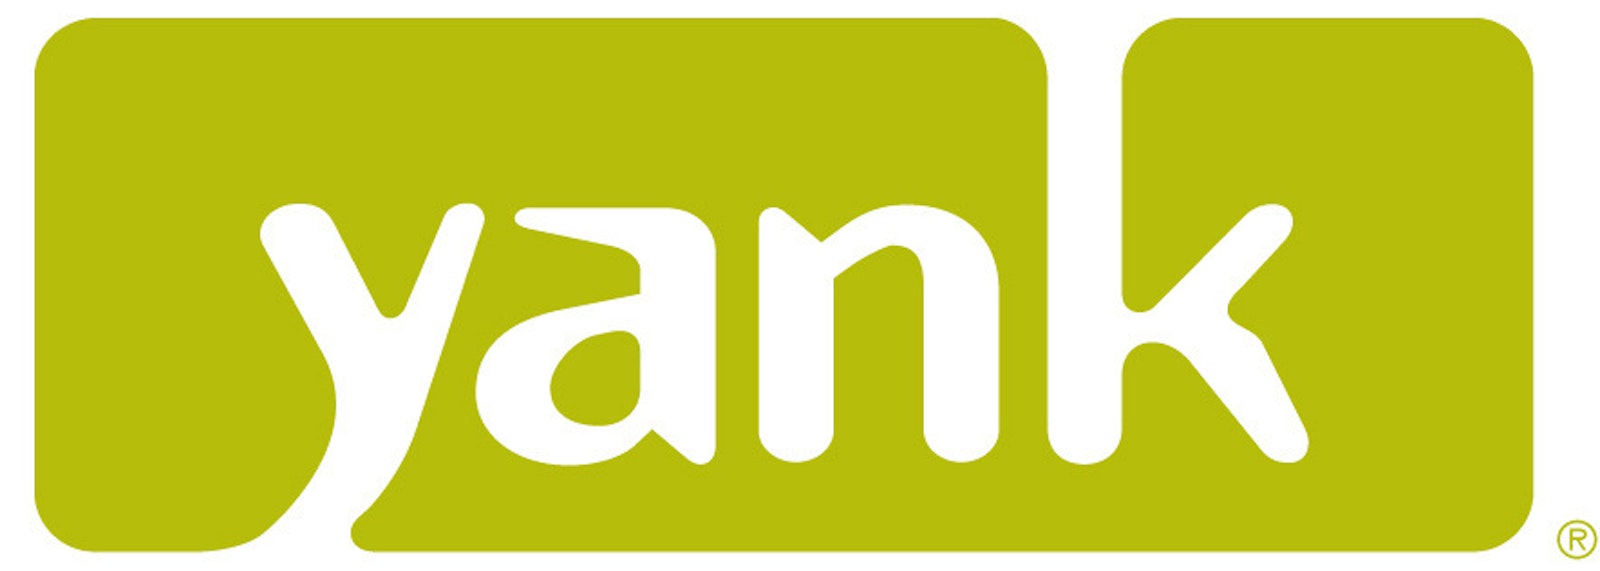 Yank logo design in green on white background.